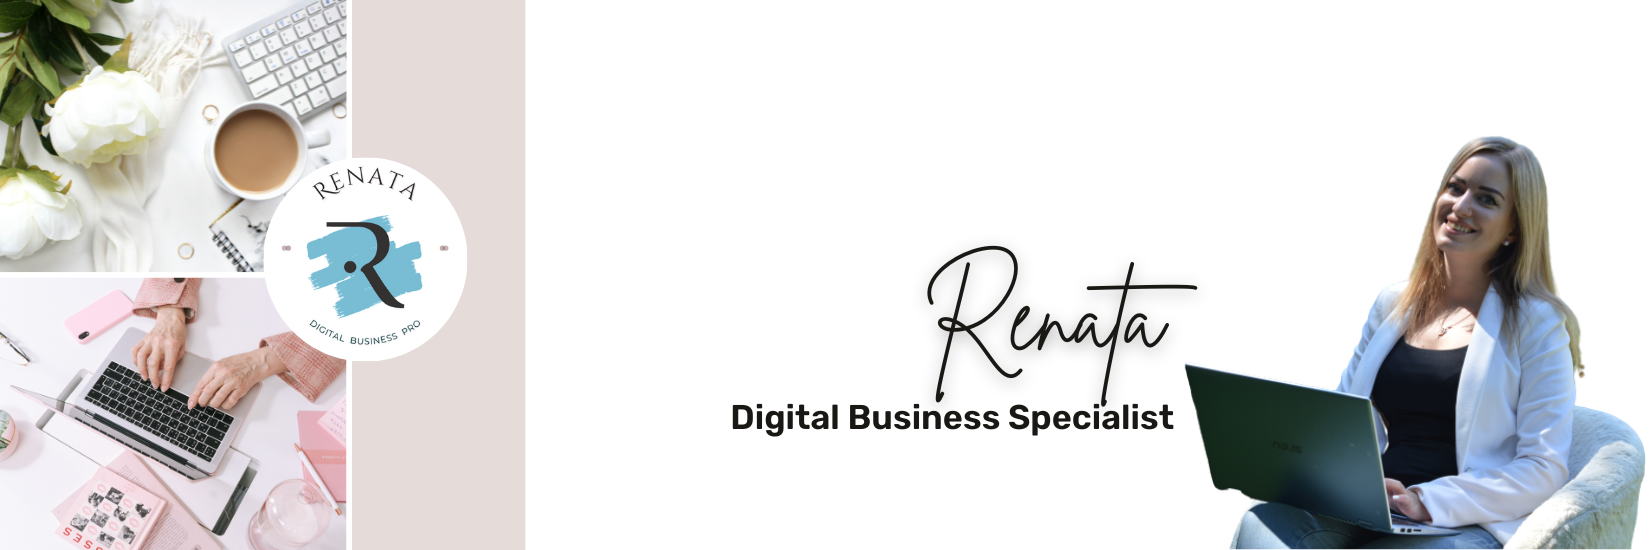 renata digital business specialist